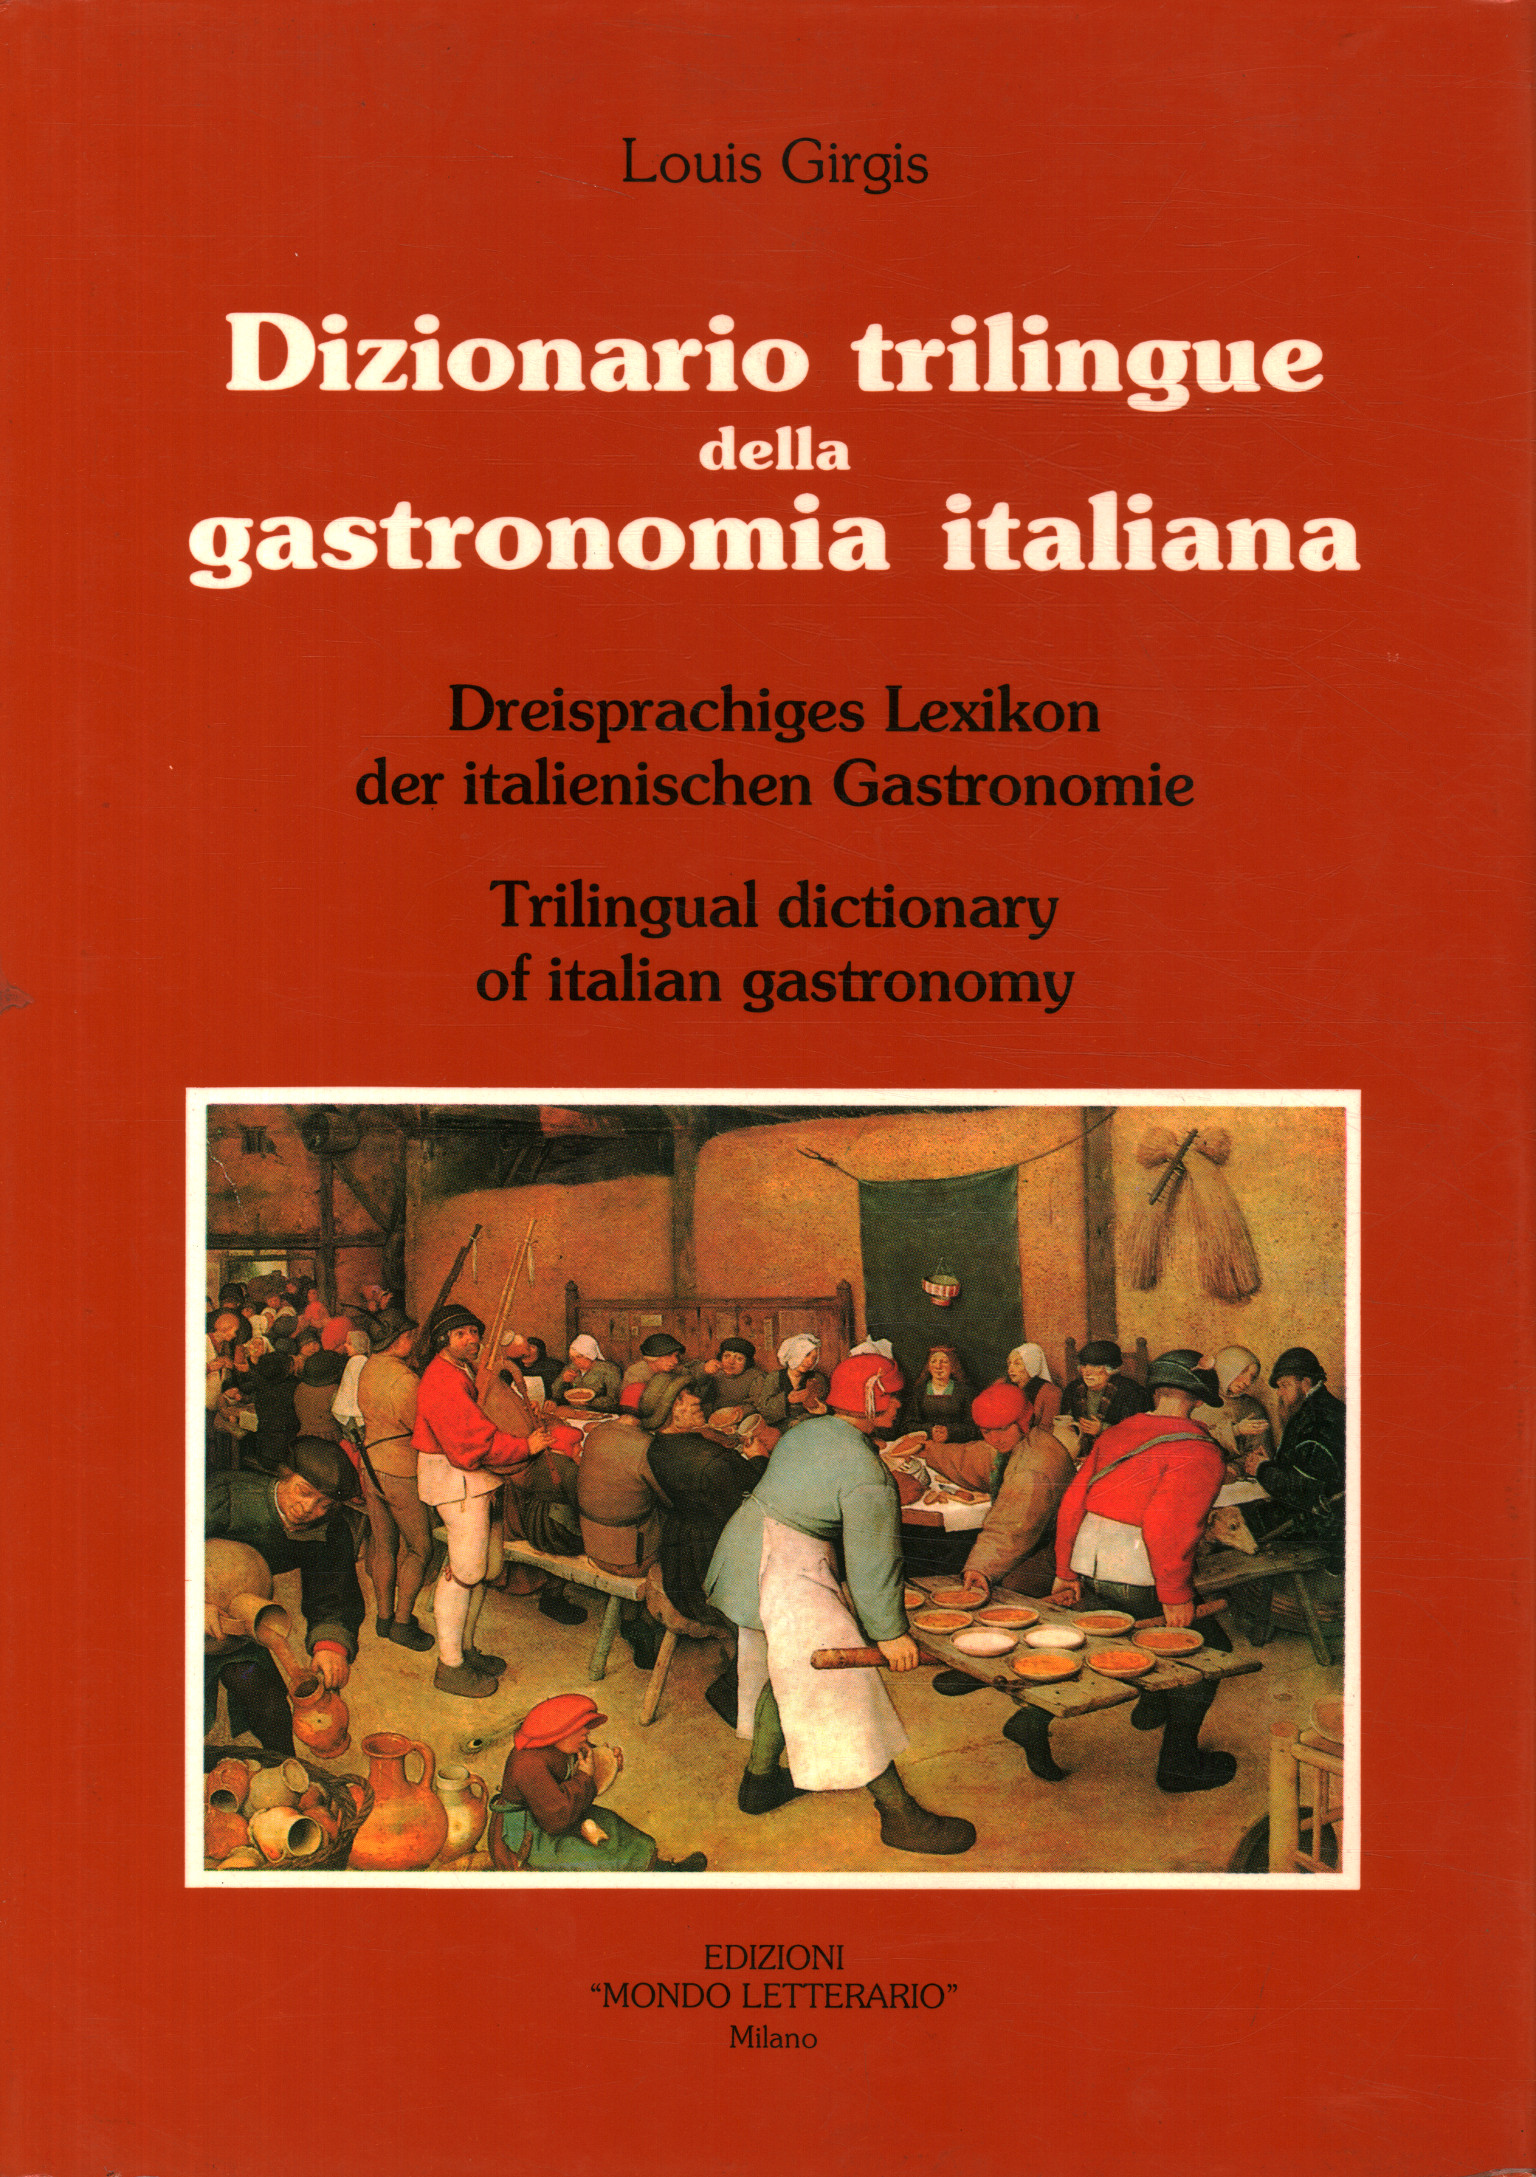 Trilingual dictionary of Italian gastronomy